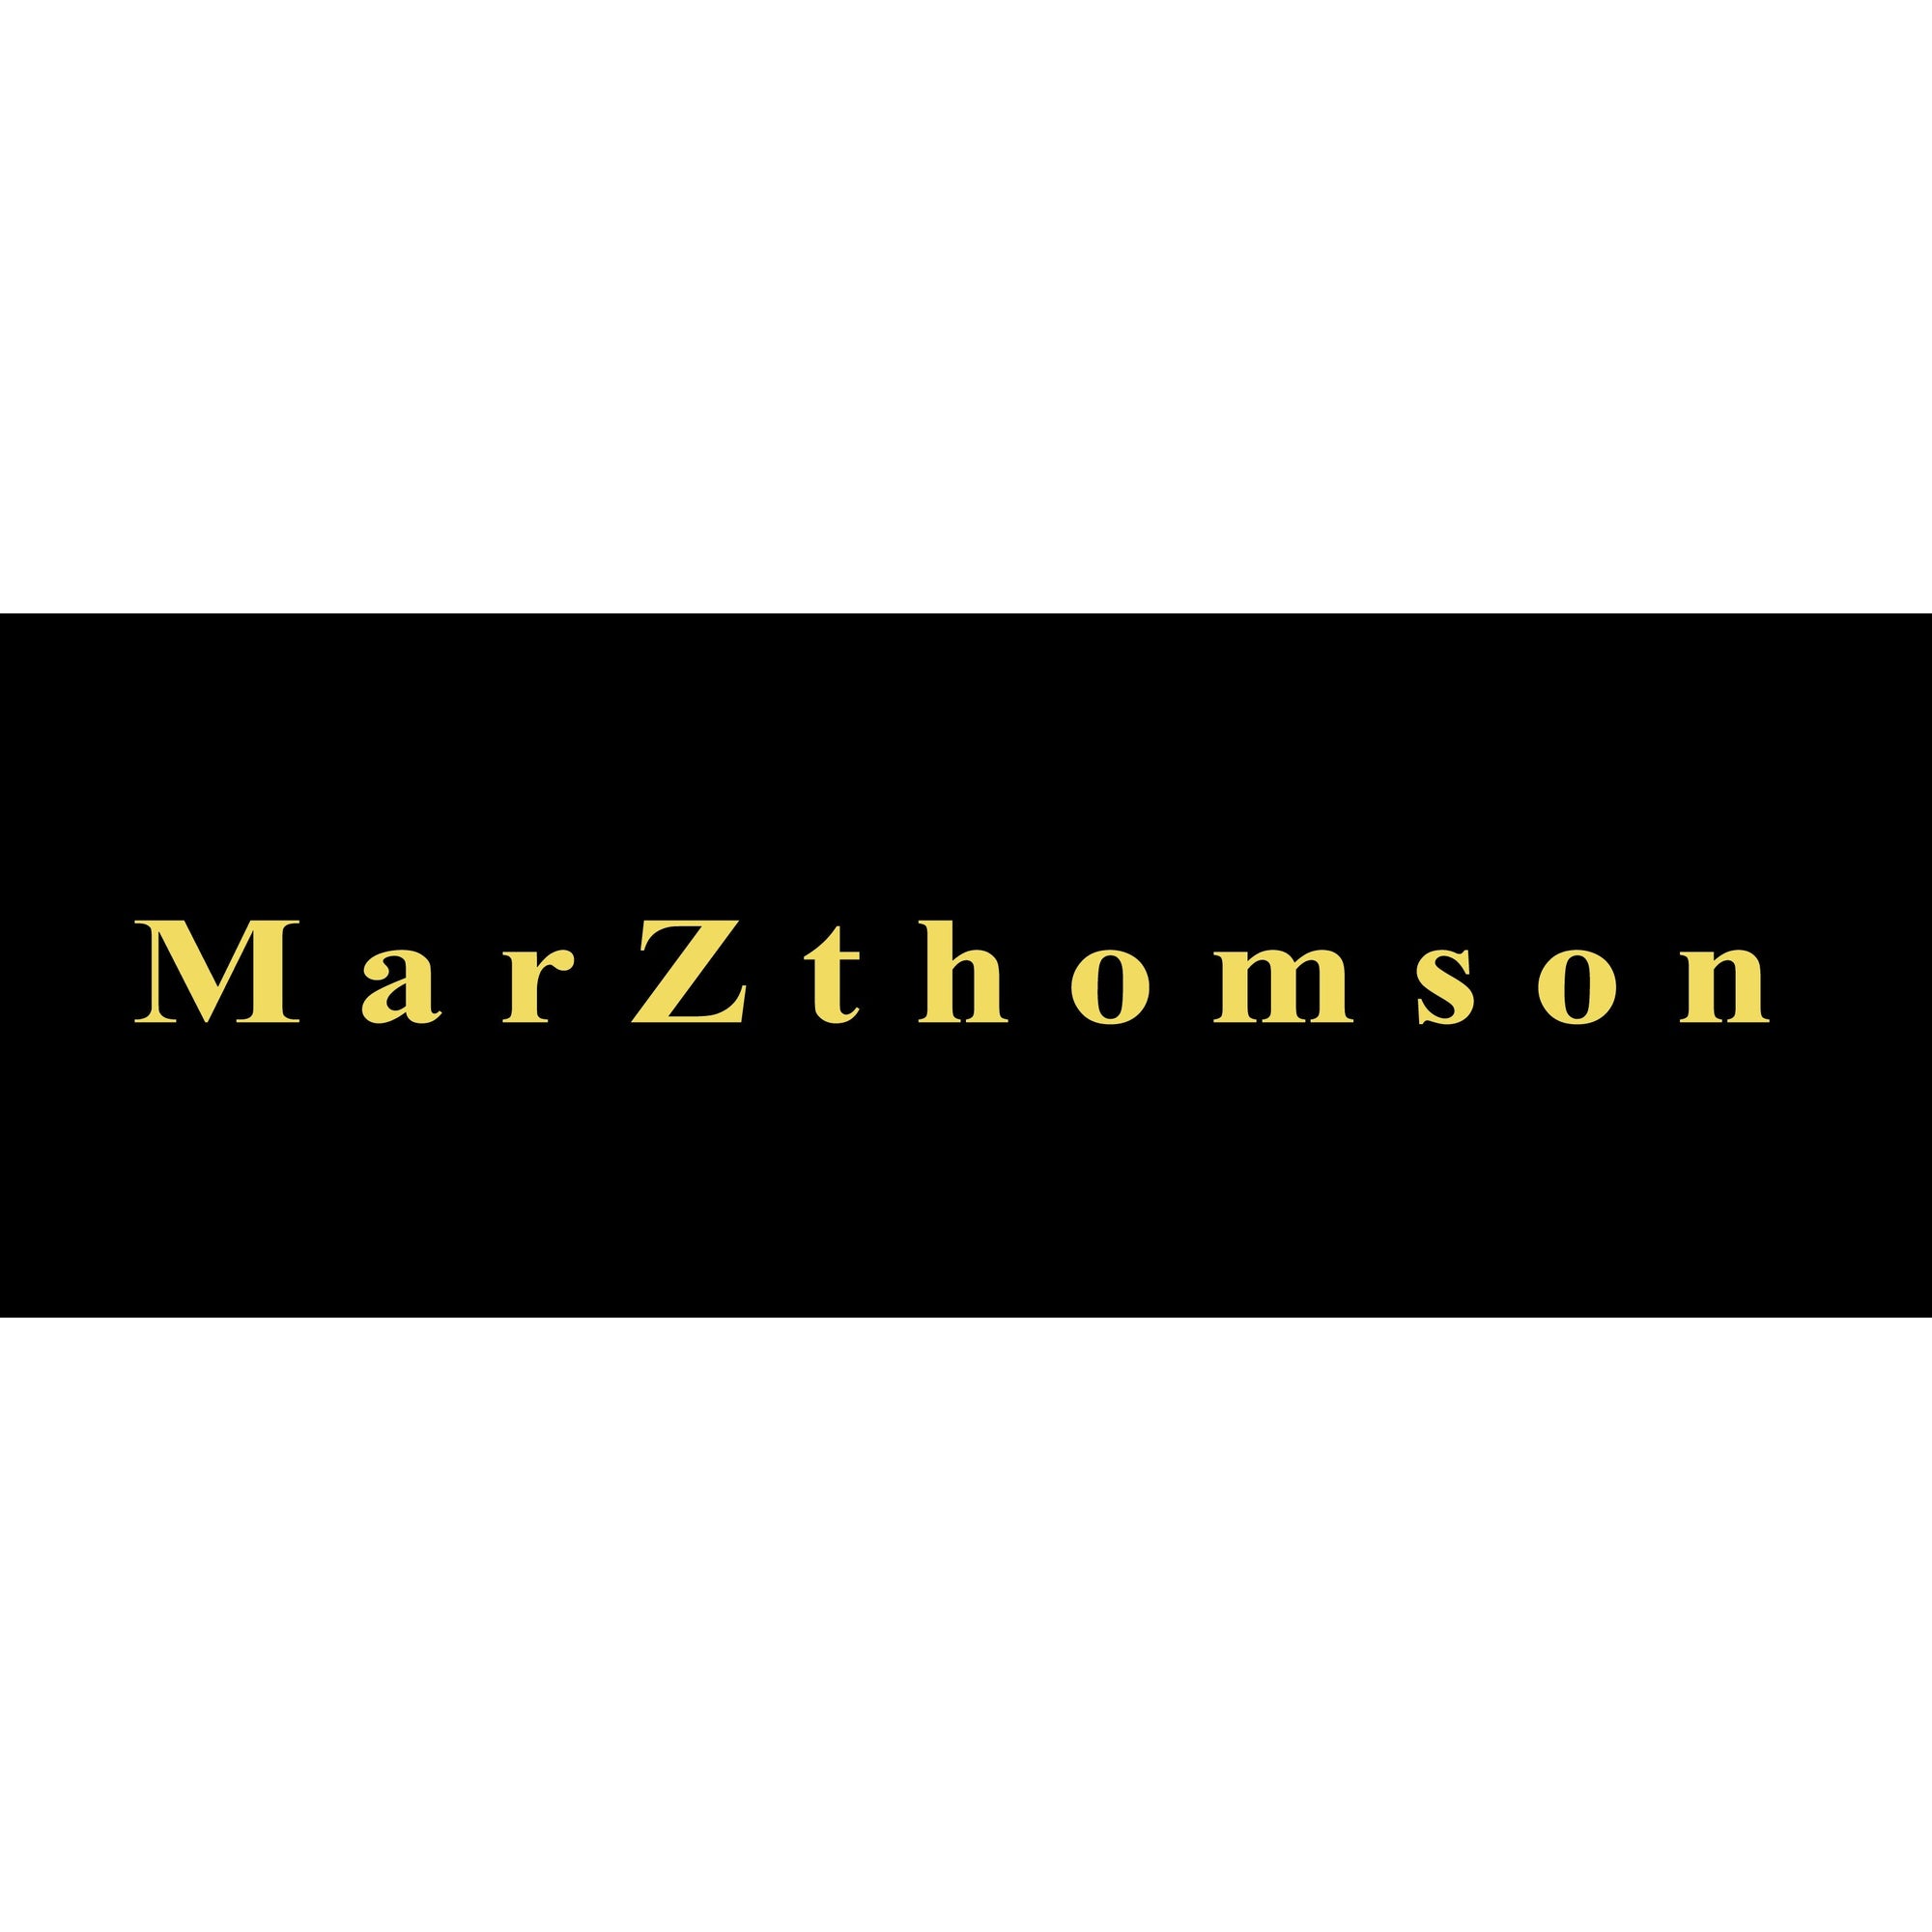 Oval Black Carbon Fibre Cufflinks Marzthomson Cufflink-Classic Cufflinks-MarZthomson-Cufflinks.com.sg